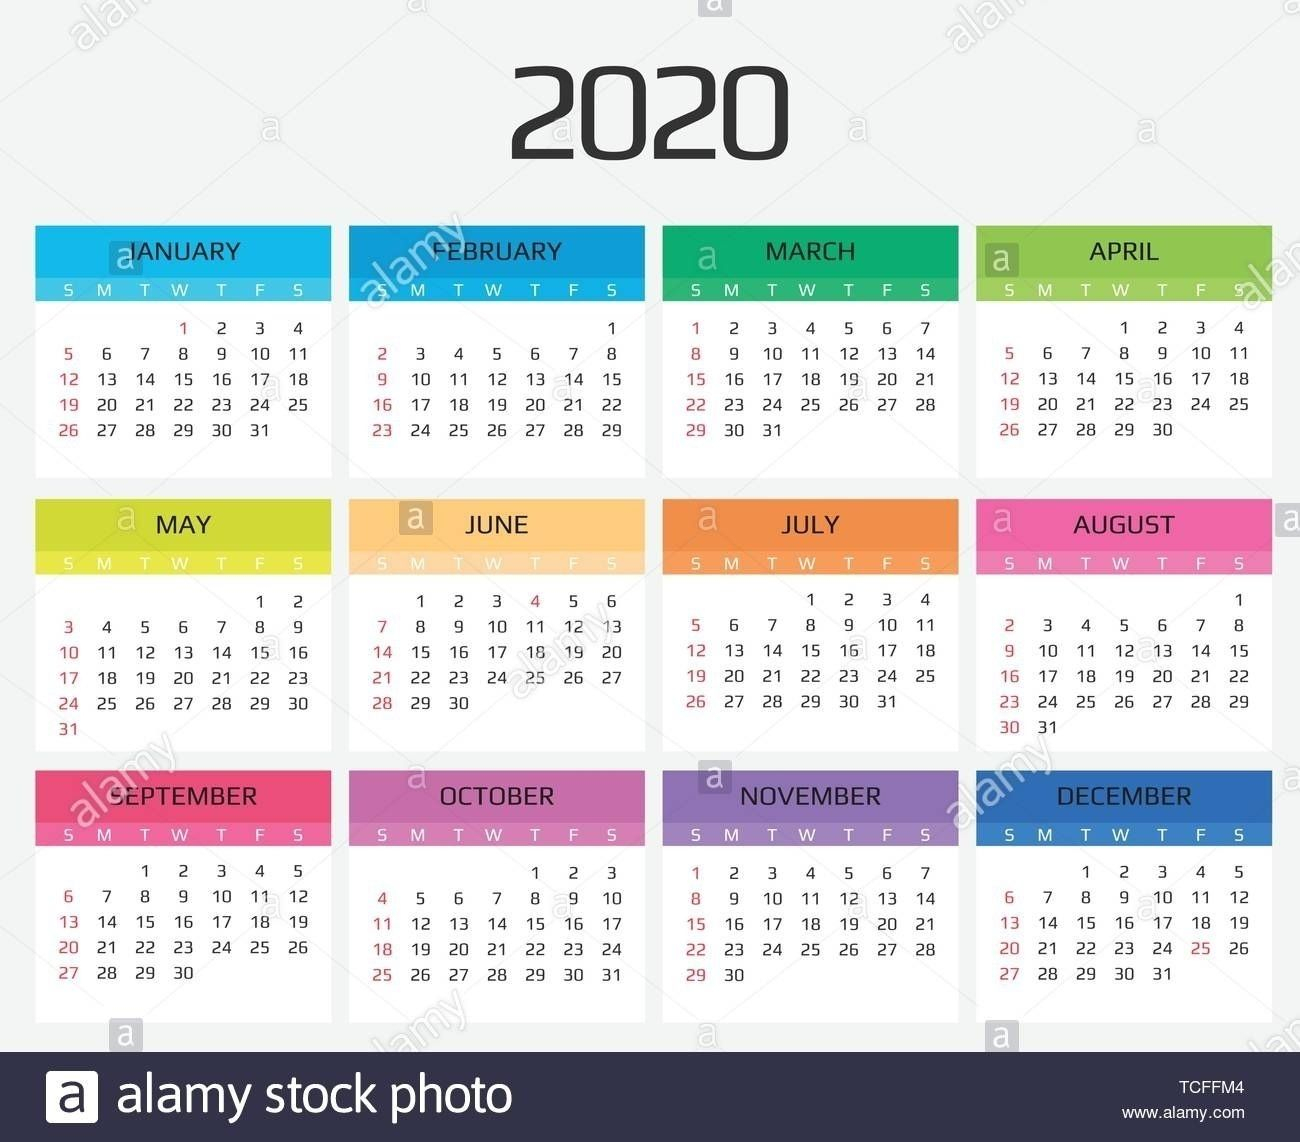 2022 Calendar With Holidays Hong Kong Towhur